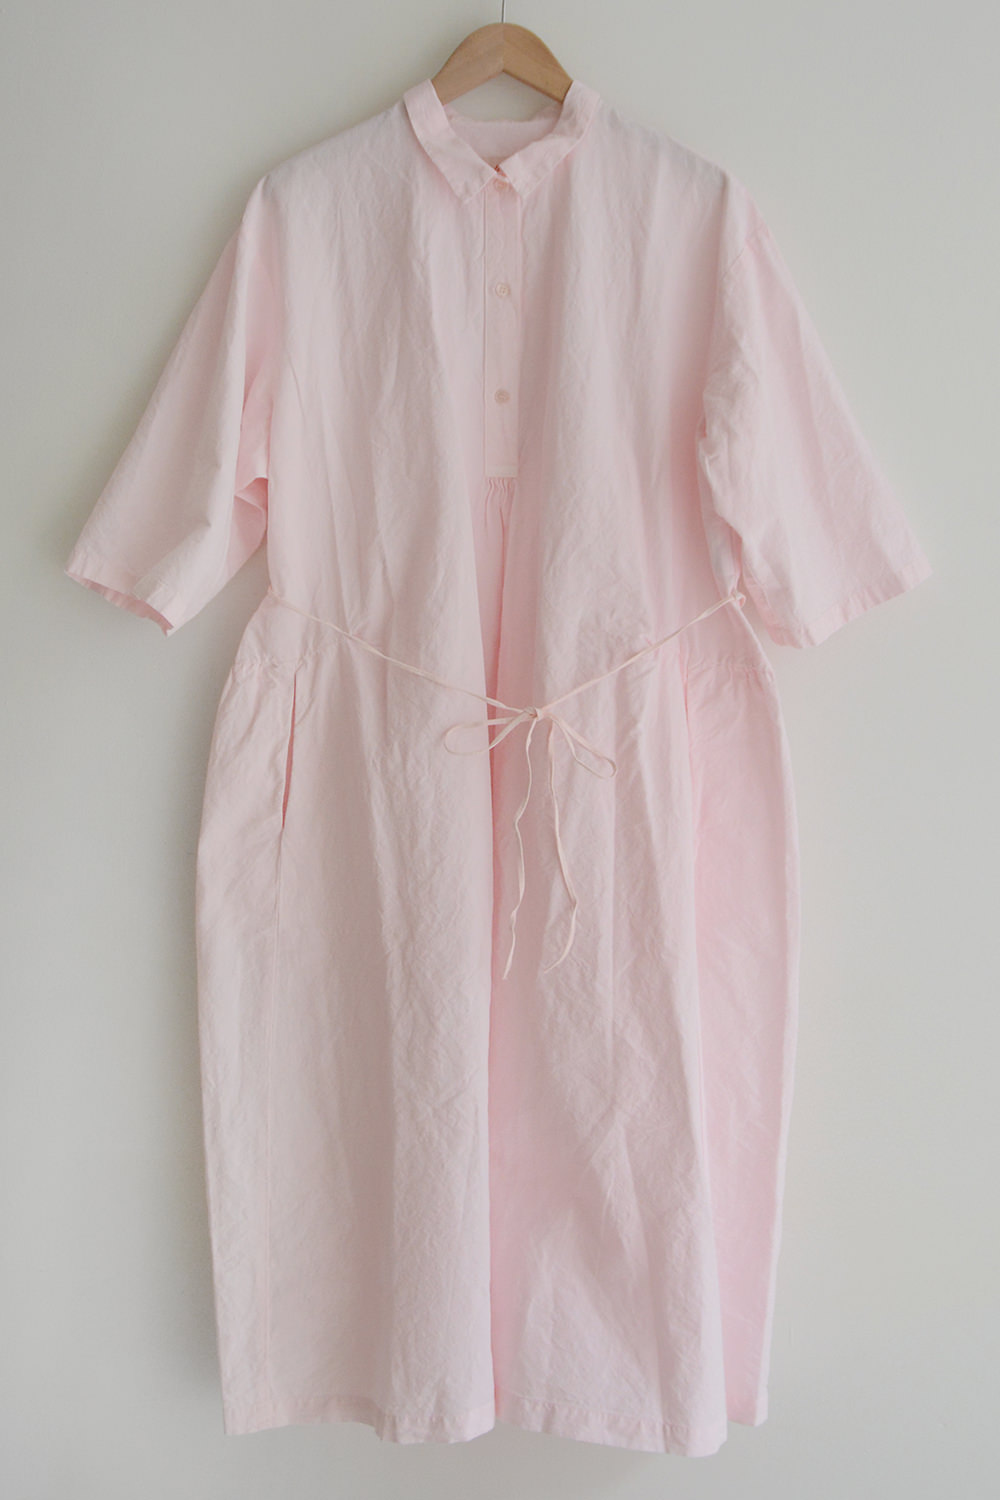 Manuelle Guibal Linen Dress Coli Think Pink Top Picture